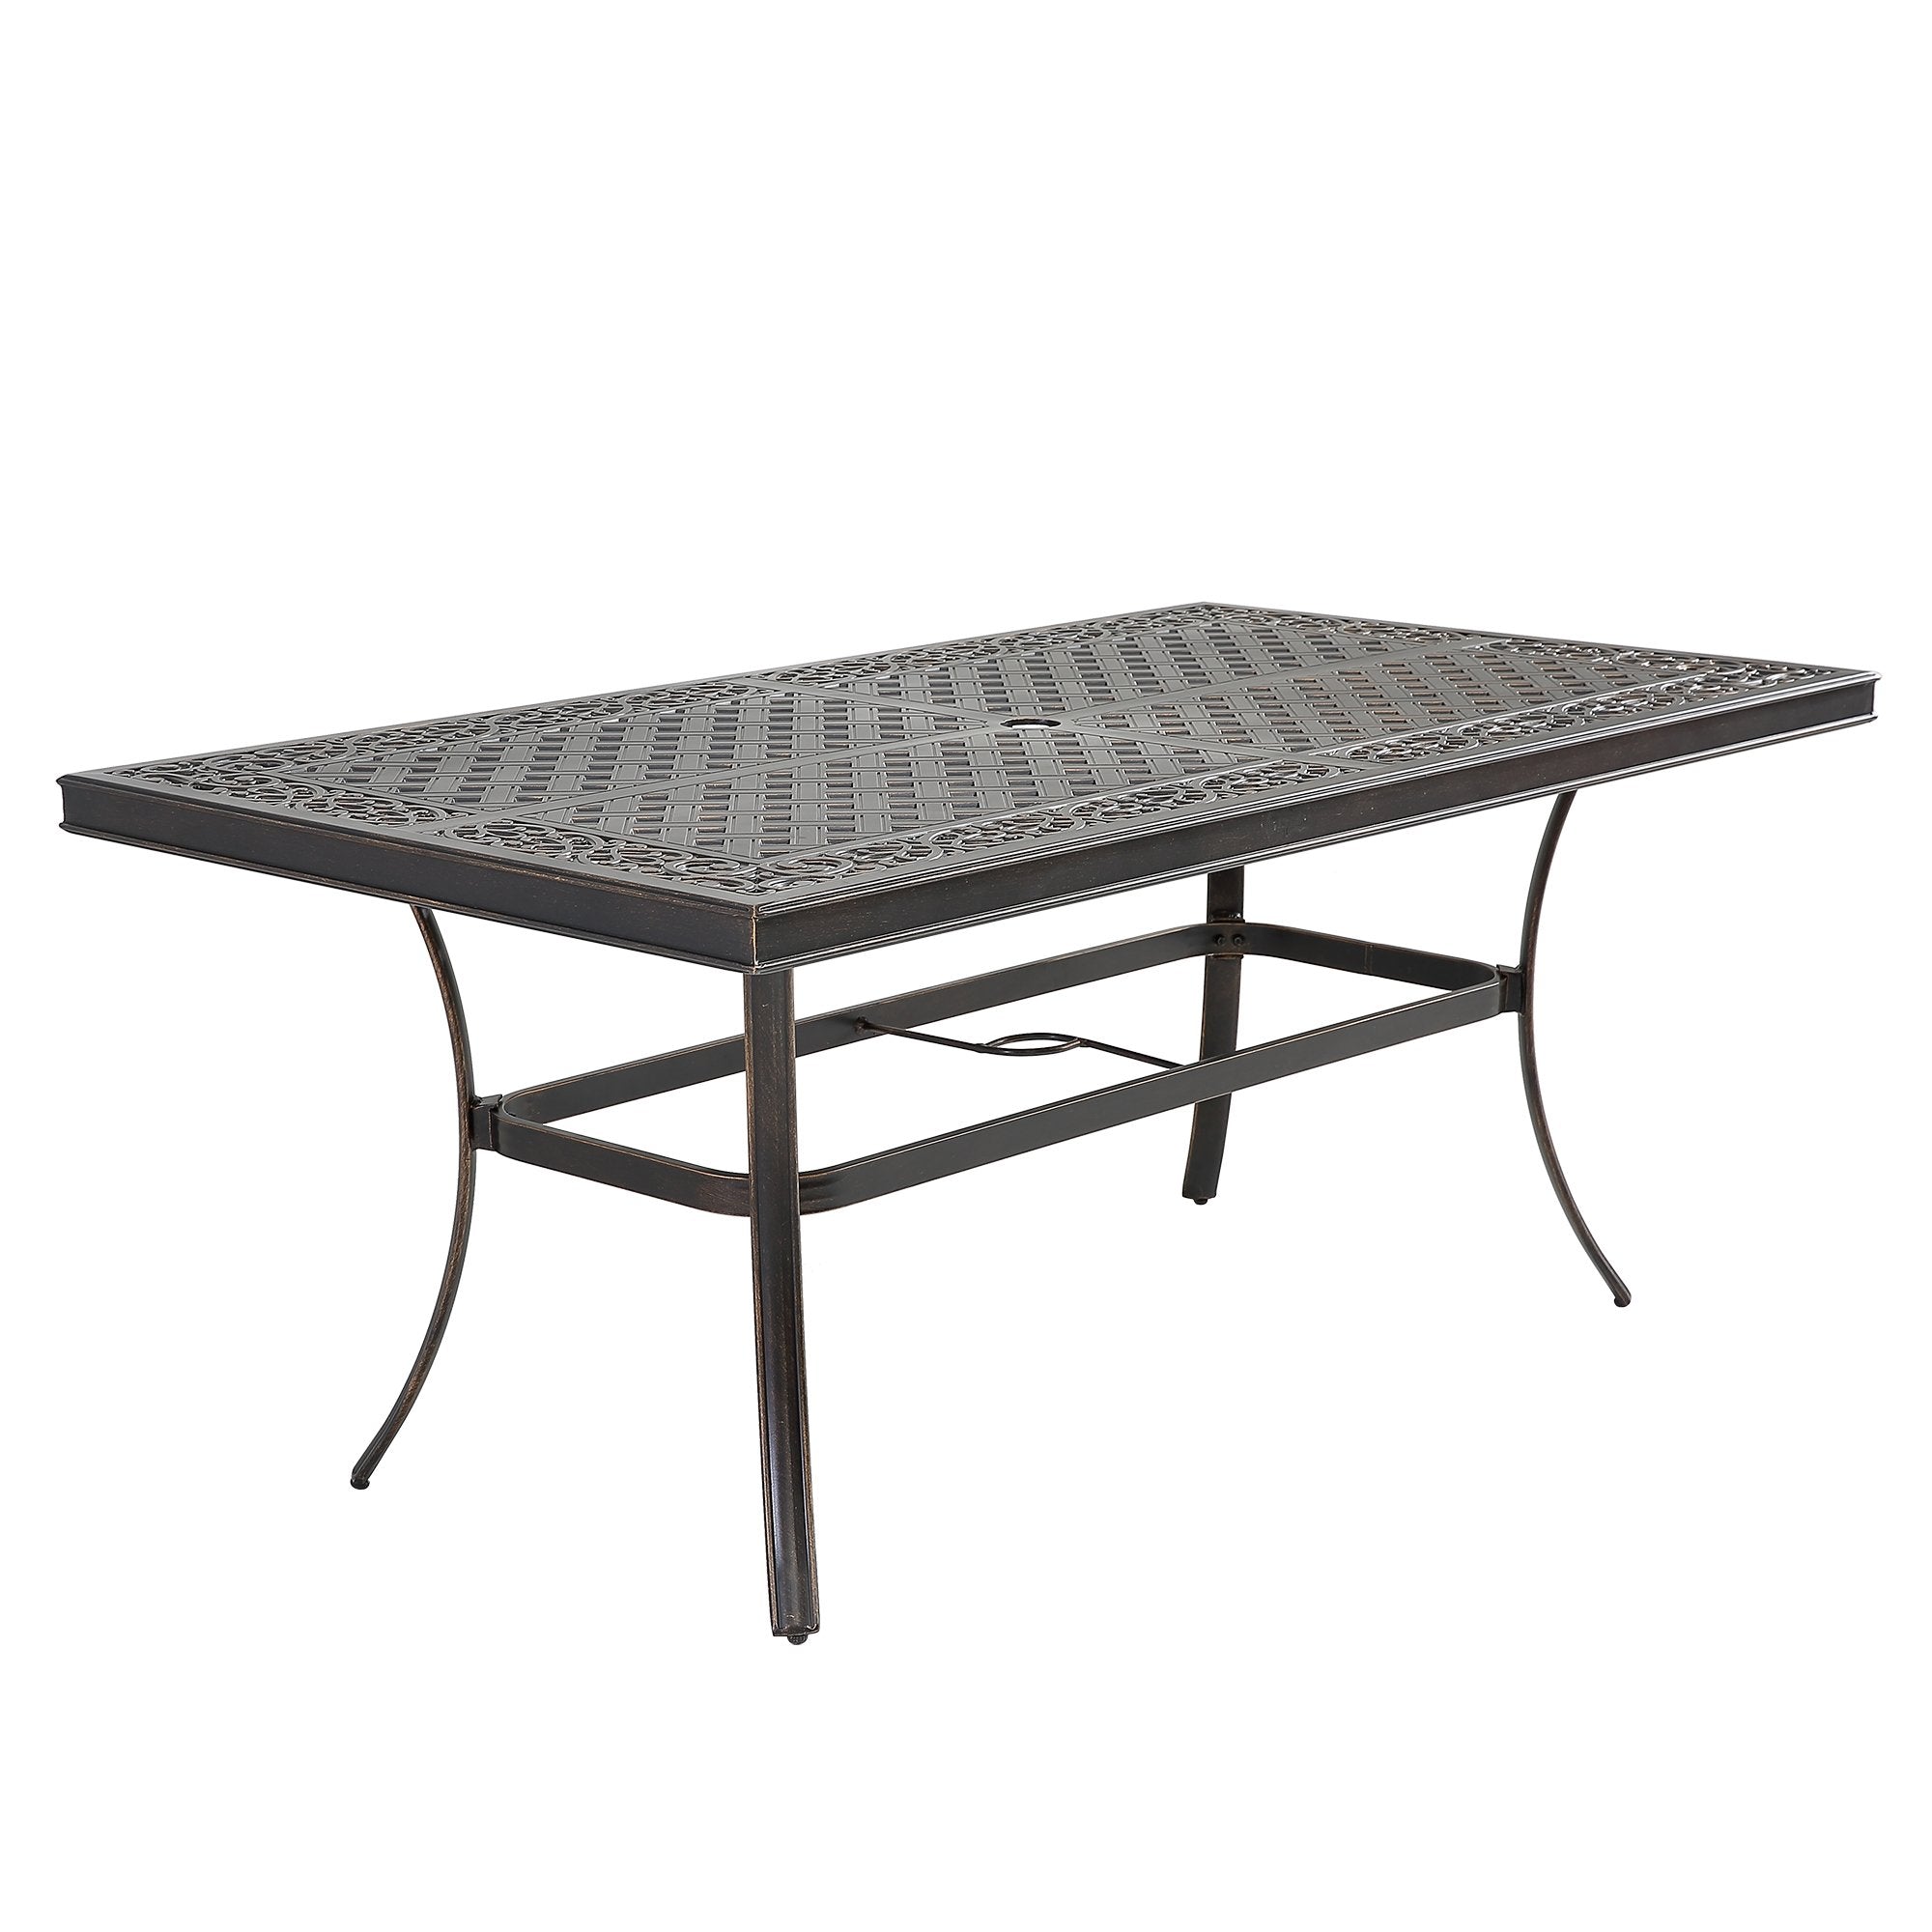 Patio rectangular cast aluminum dining table with umbrella hole-Boyel Living